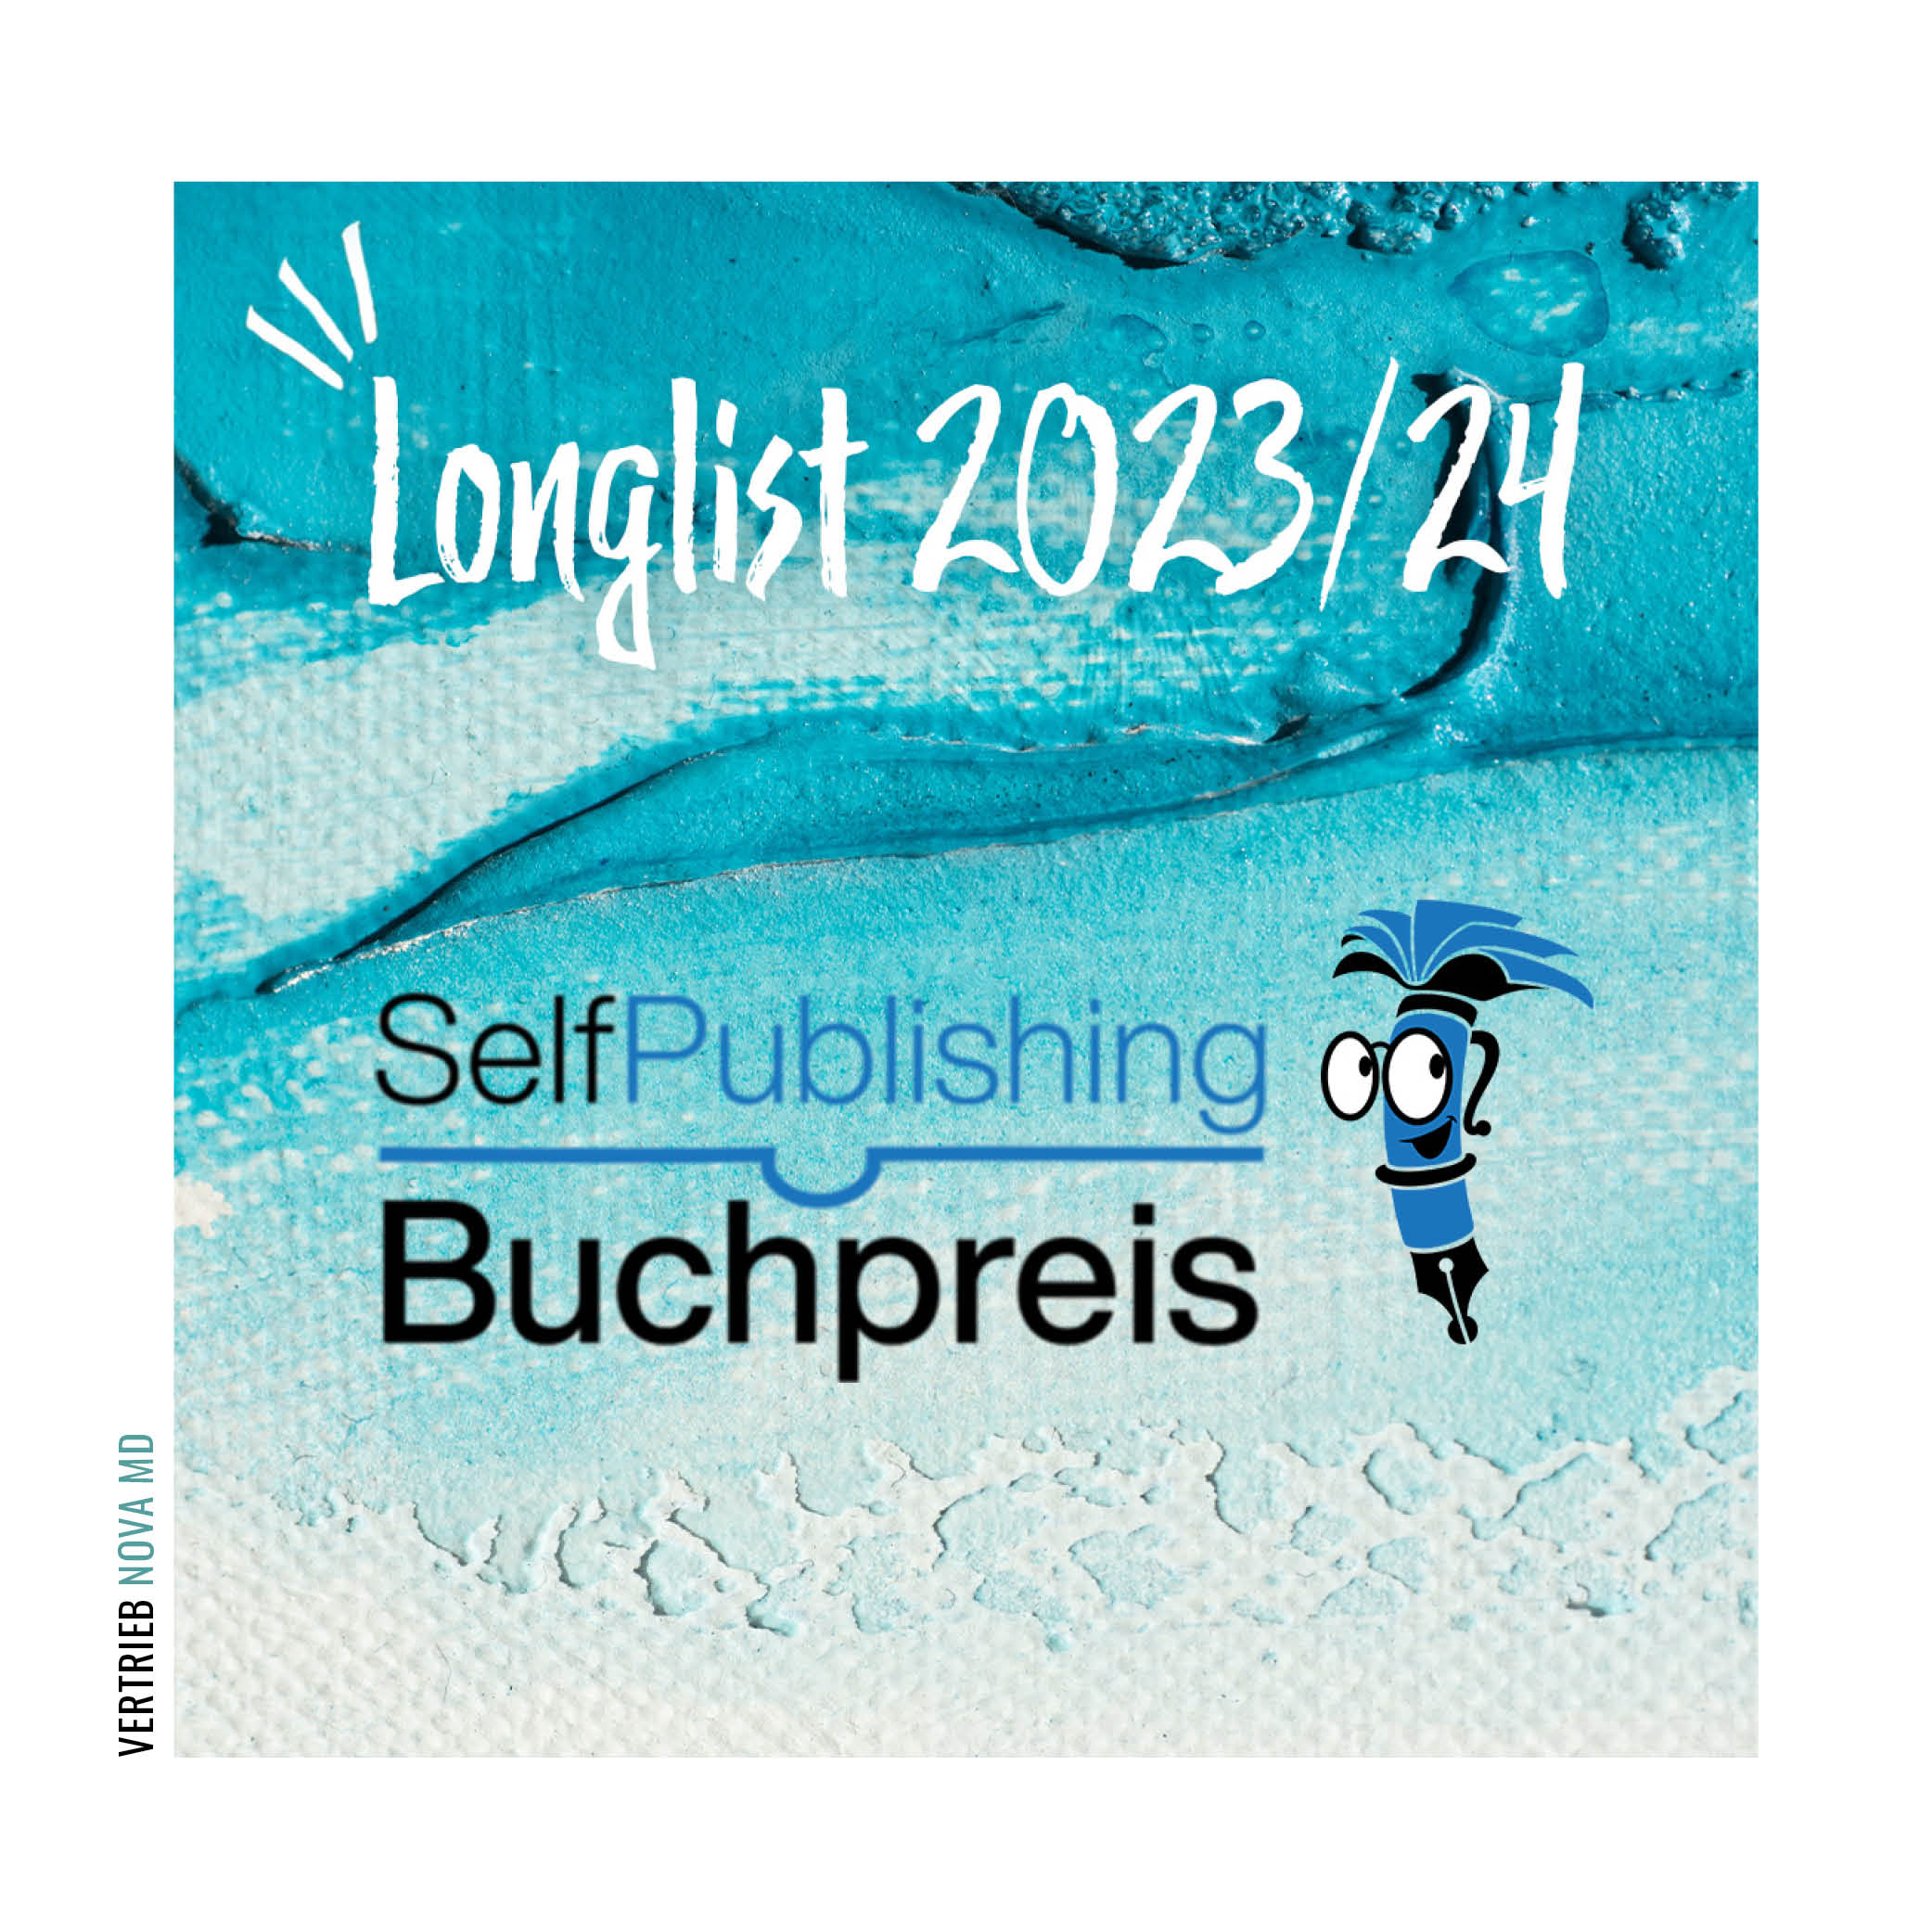 Bekanntgabe der SelfPublishing Buchpreis 2023/24 Longlist